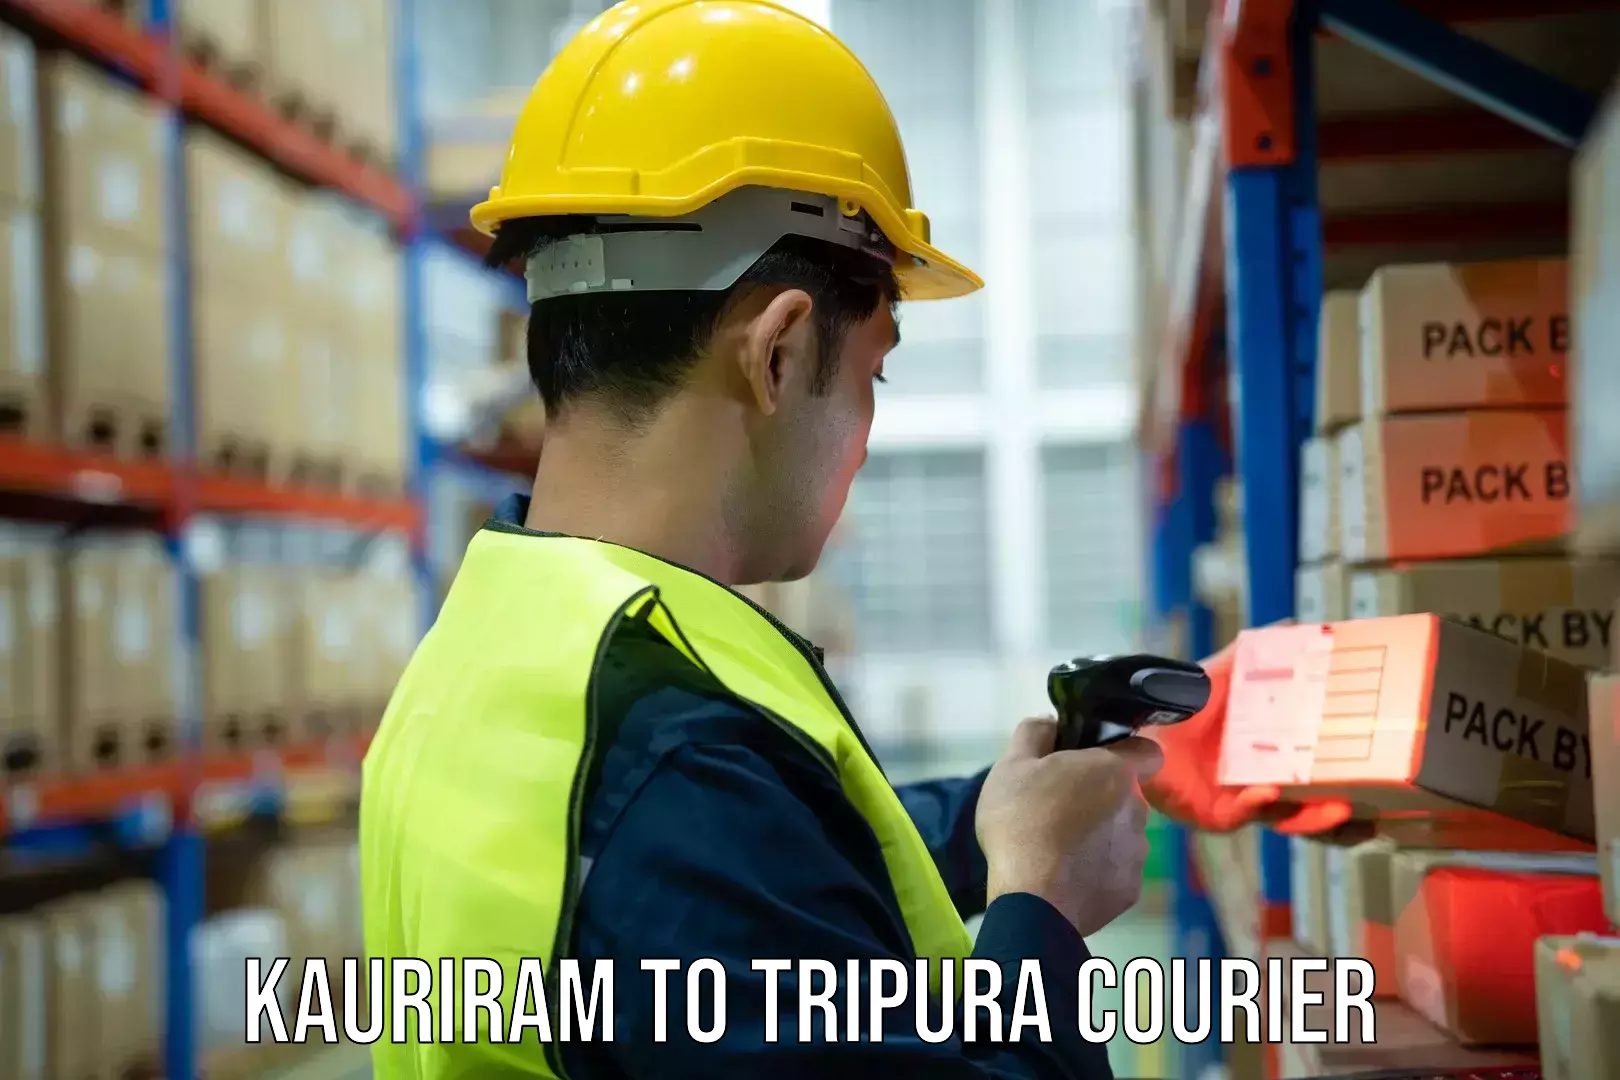 Easy access courier services Kauriram to Kailashahar